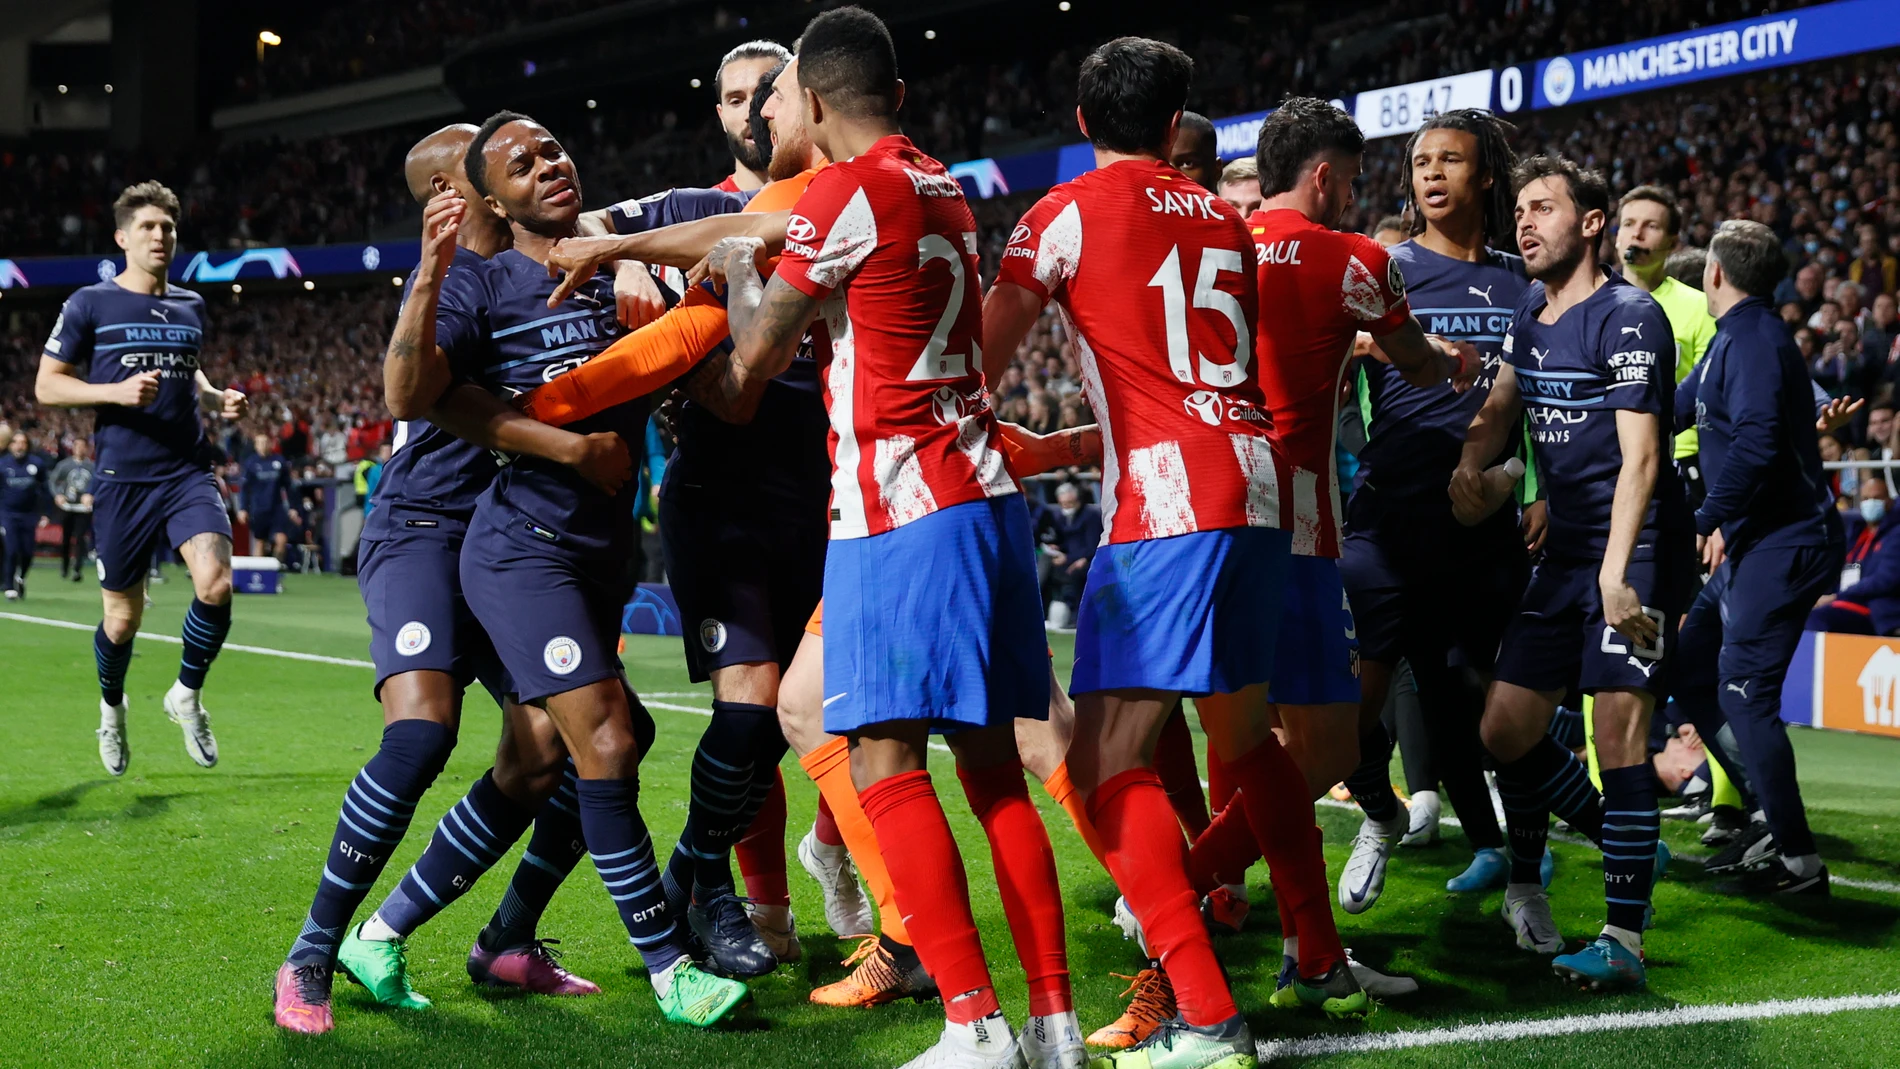 La gran pelea final en el Atlético de Madrid - Manchester City